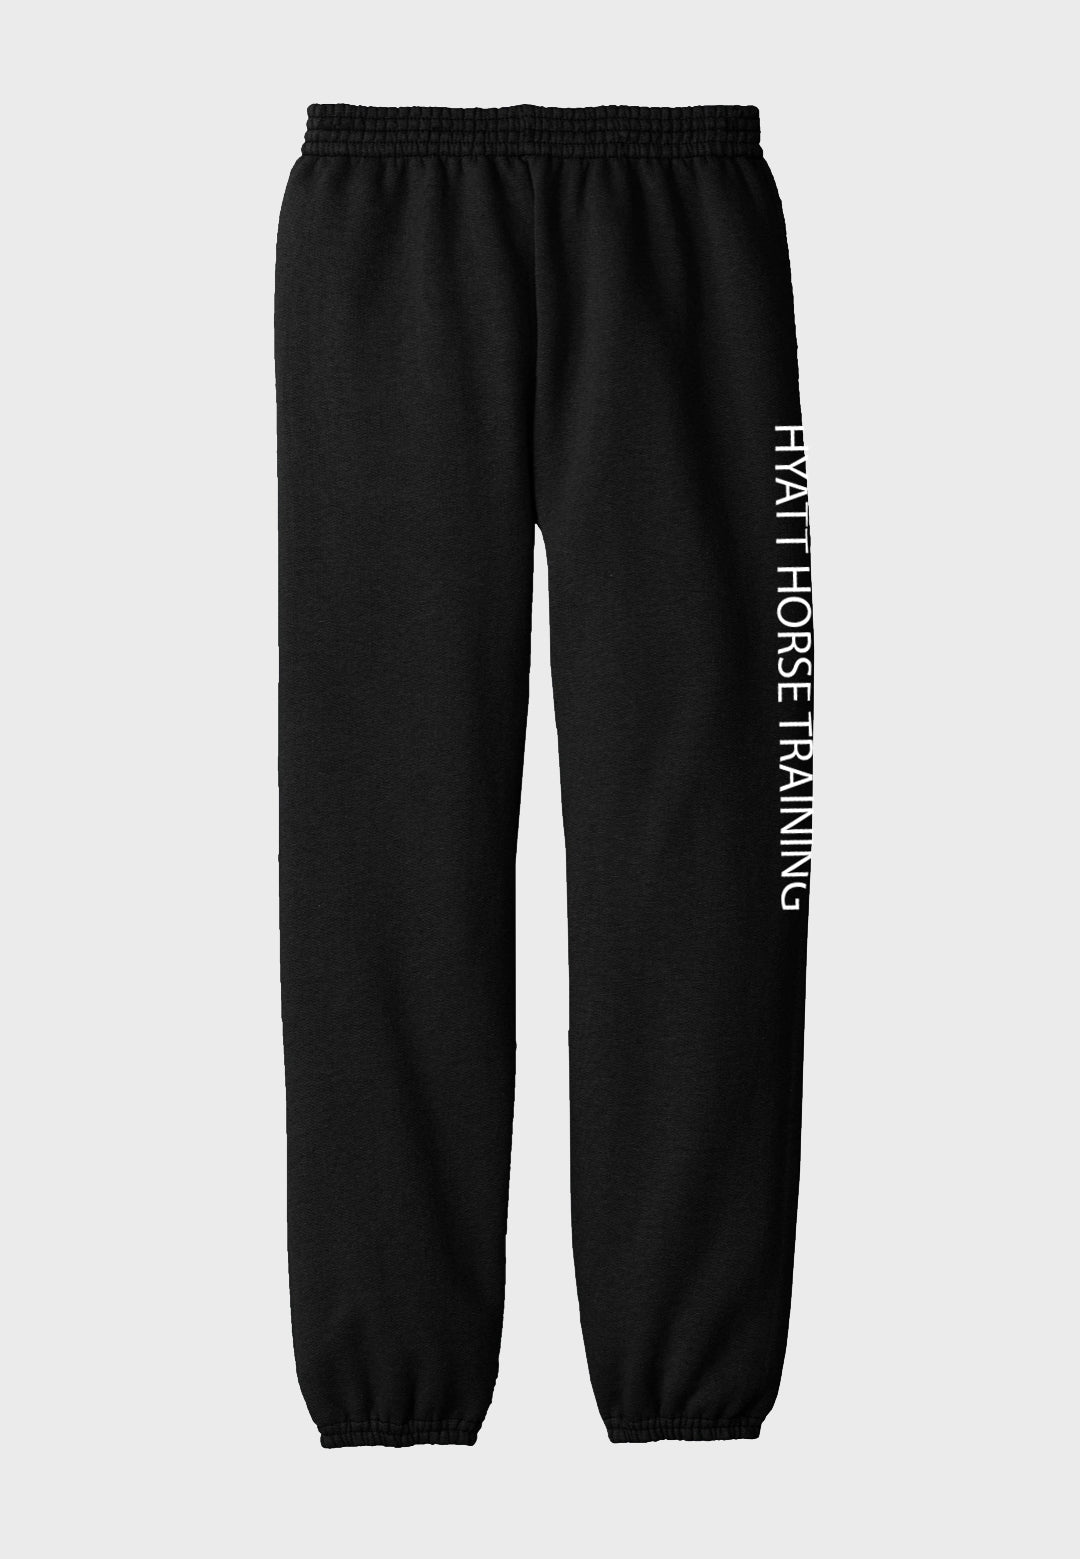 Hyatt Horse Training Port & Company® Youth Core Fleece Sweatpants with Pockets - Black